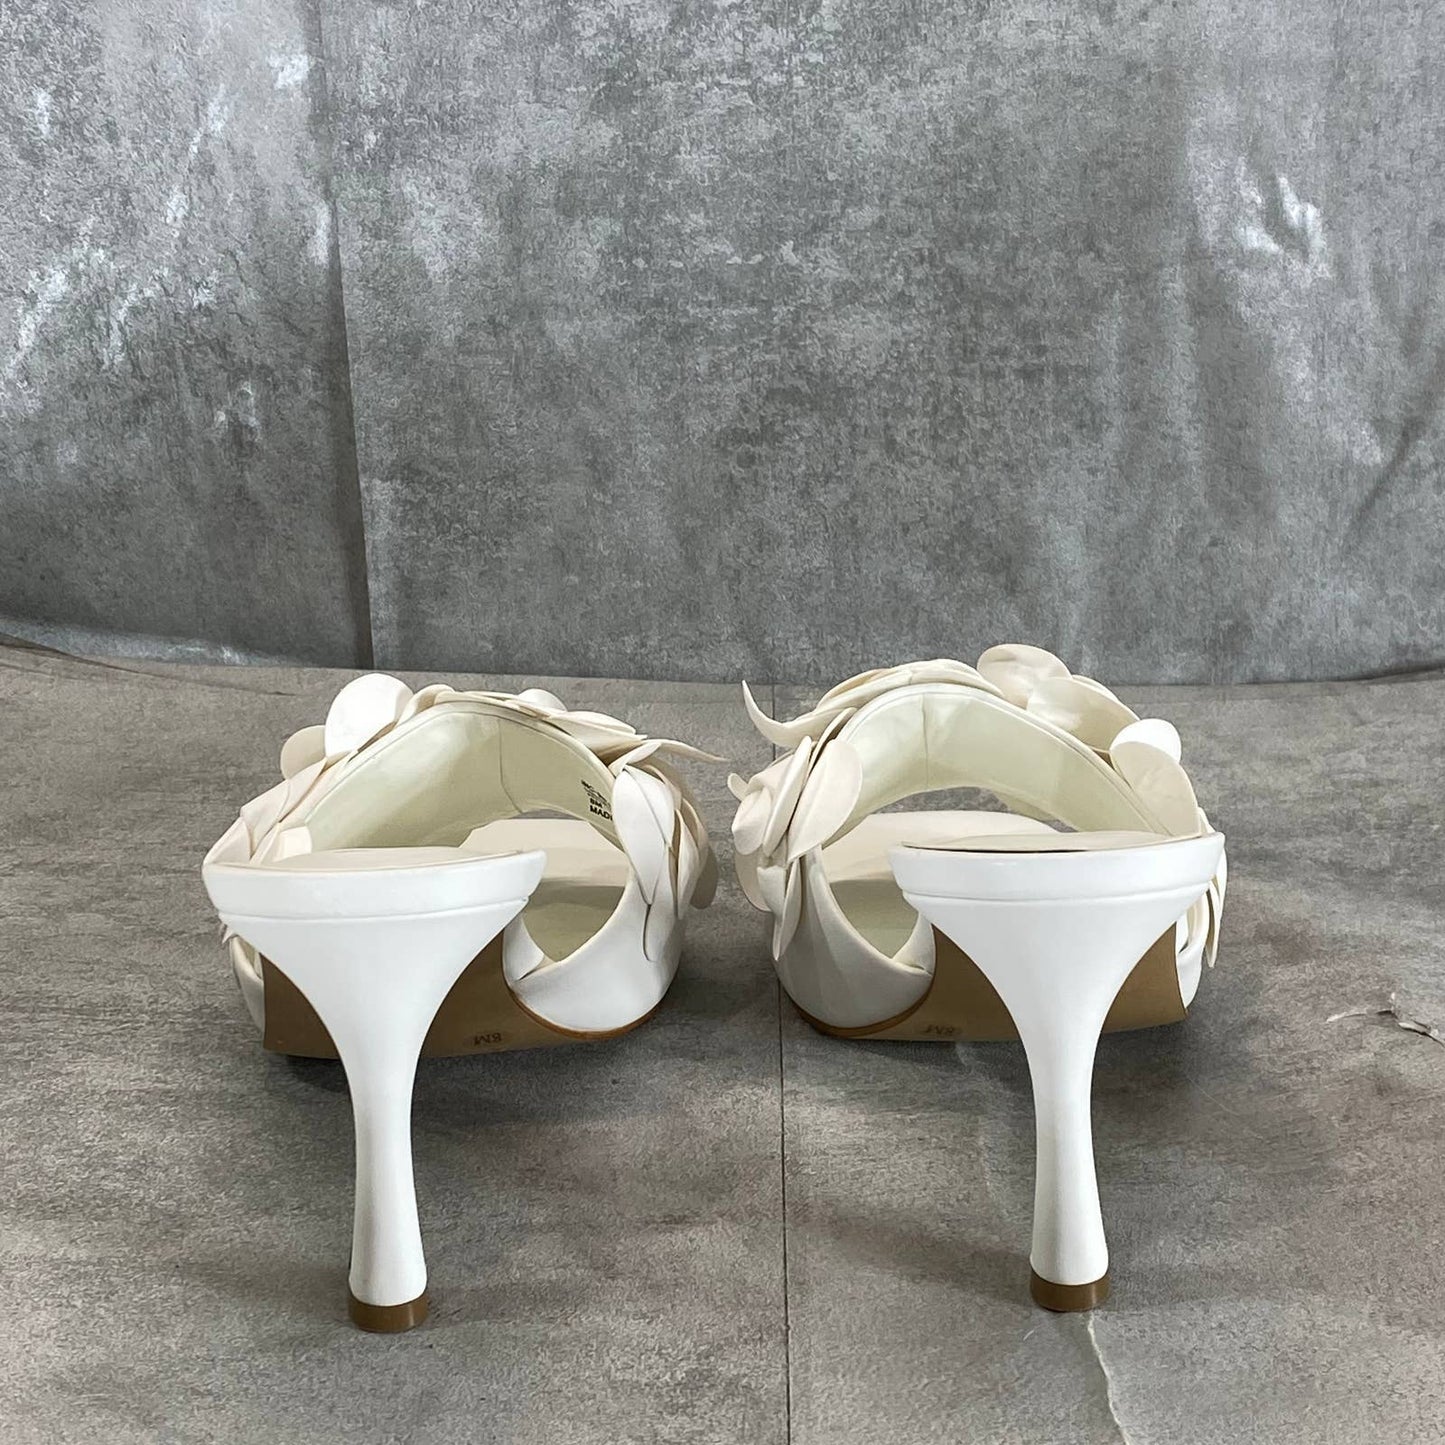 INC INTERNATIONAL CONCEPTS Women's White Weslyn Flower-Trim Slide Sandals SZ 8